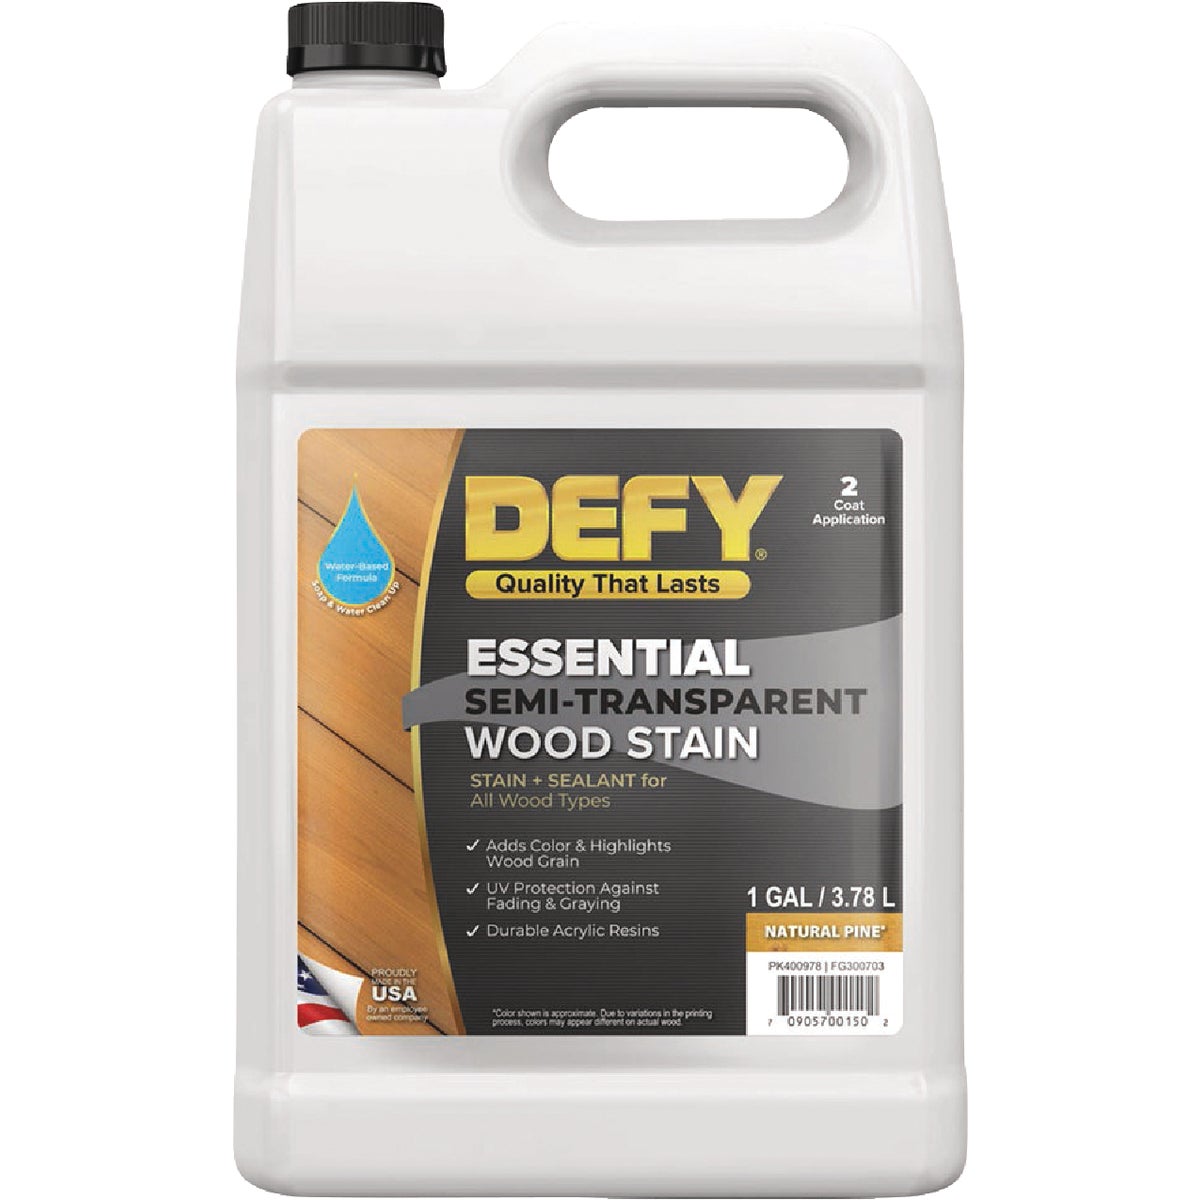 Defy Essential Semi-Transparent Wood Stain, Natural Pine, 1 Gal.